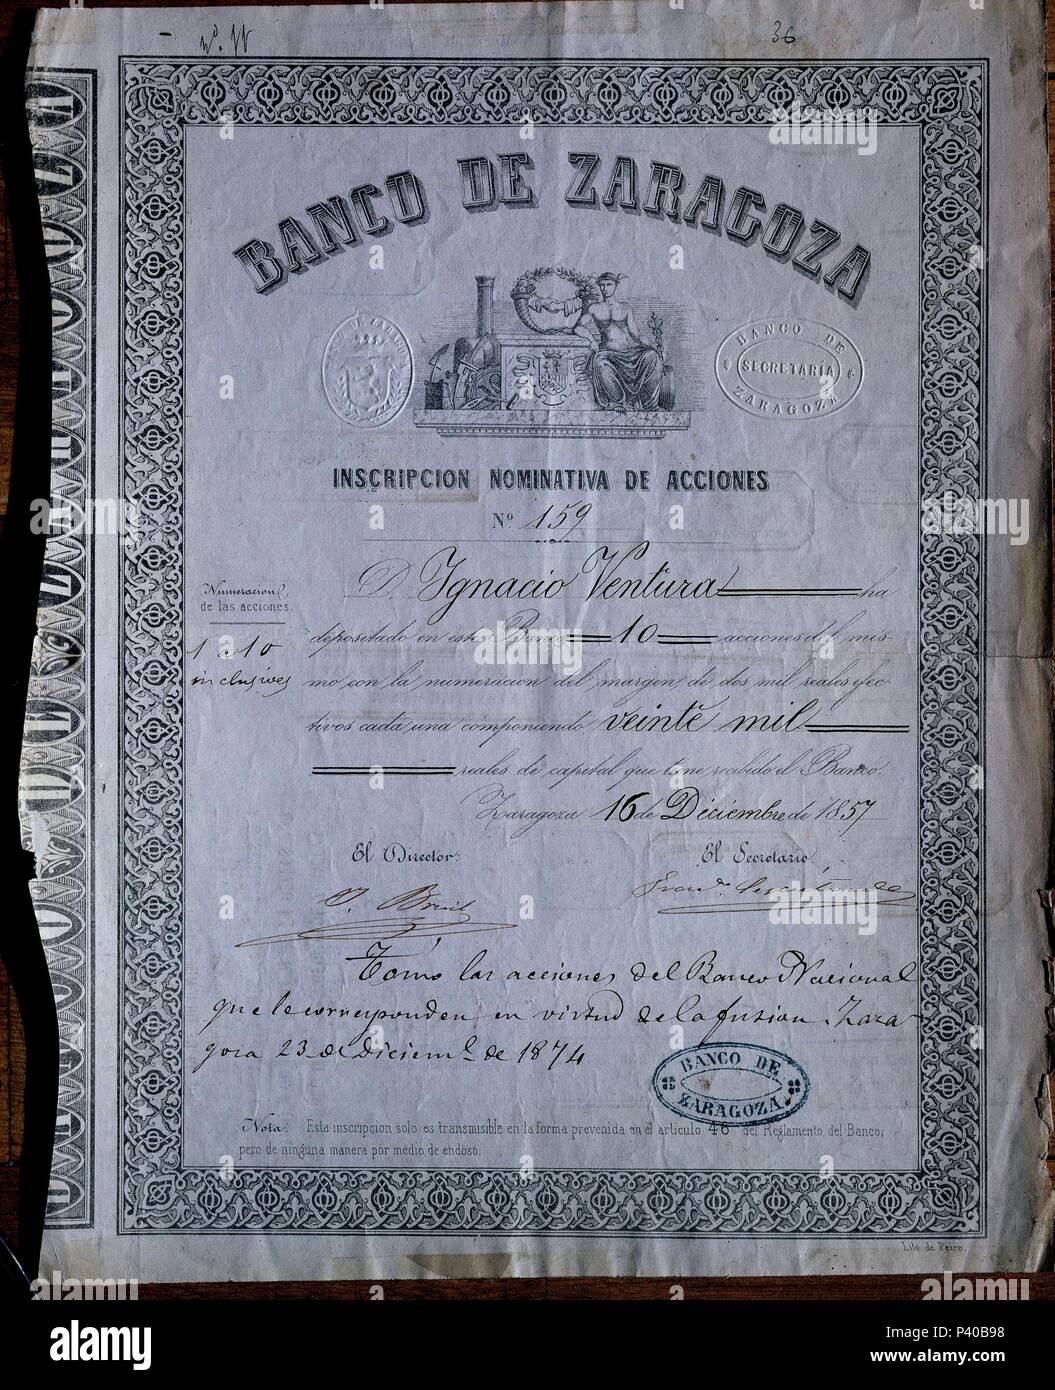 INSCRIPC NOMINATIVA DE ACCIONES DEL BANCO ZARAGOZANO-1857. Location: BOLSA DE COMERCIO-COLECCION, MADRID, SPAIN. Stock Photo